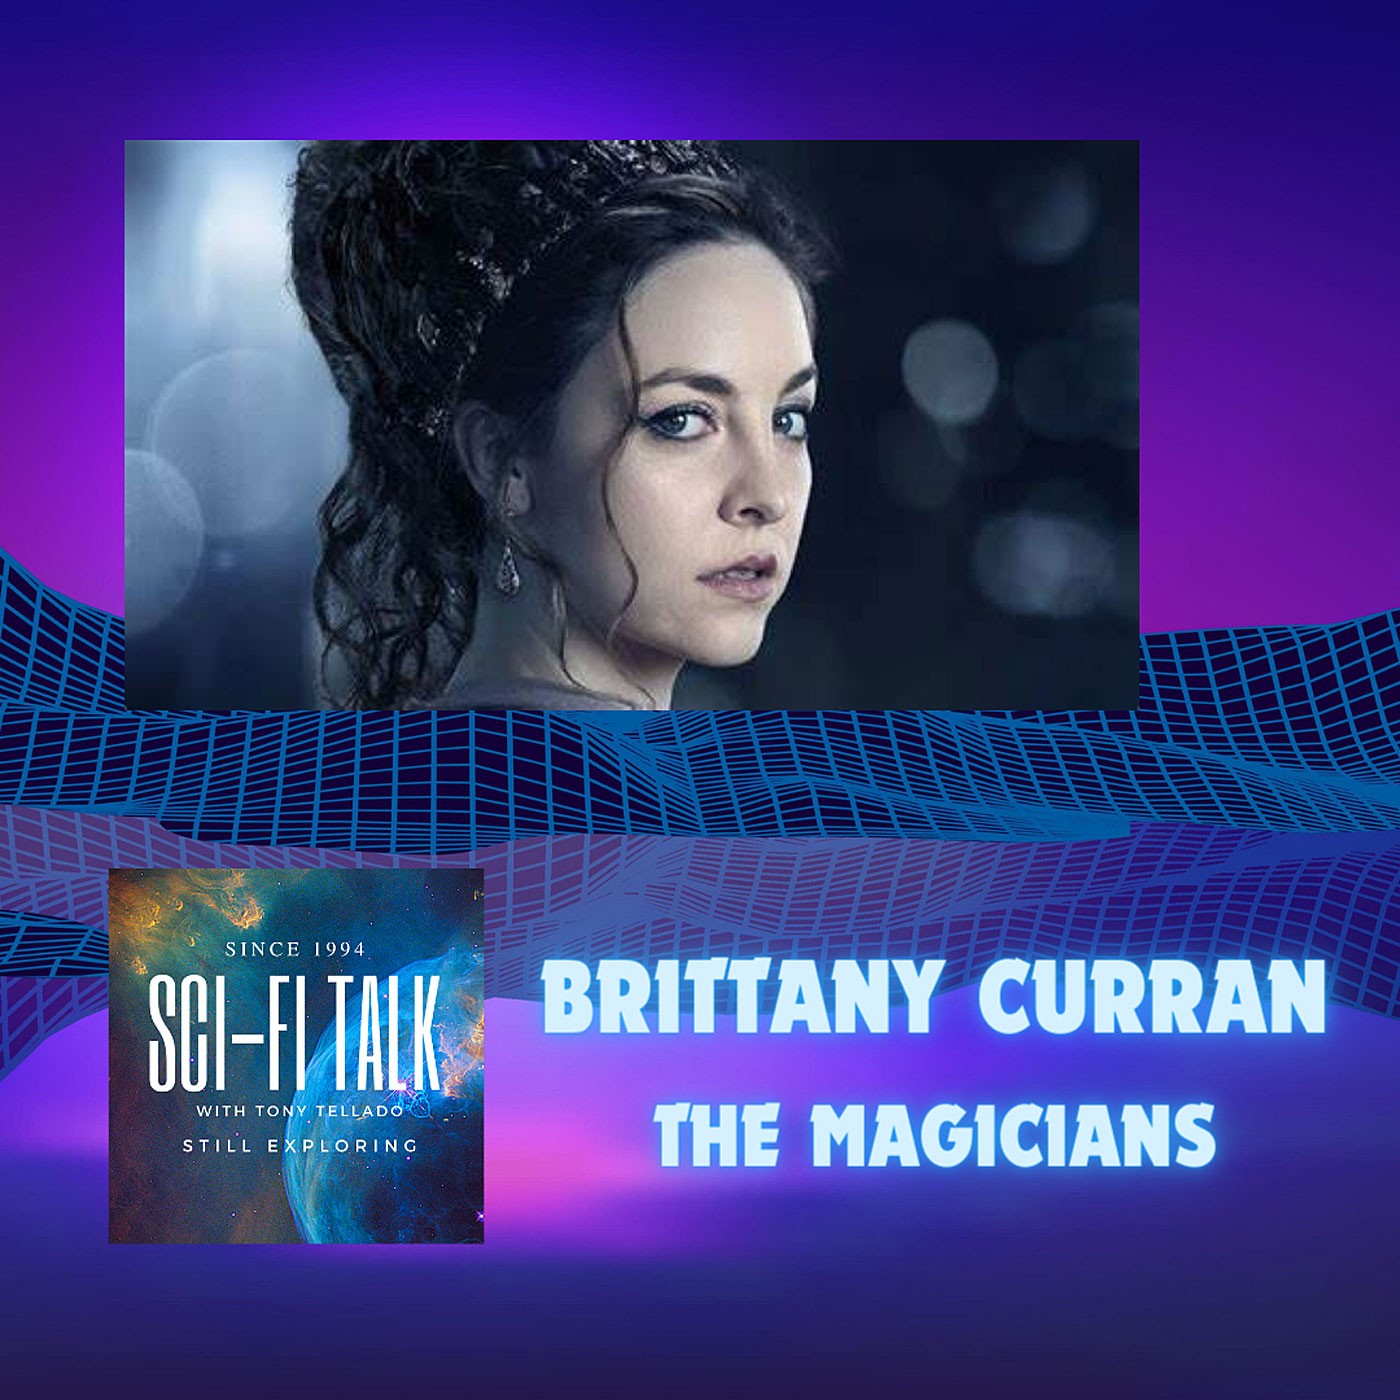 The Magicians' Brittany Curran